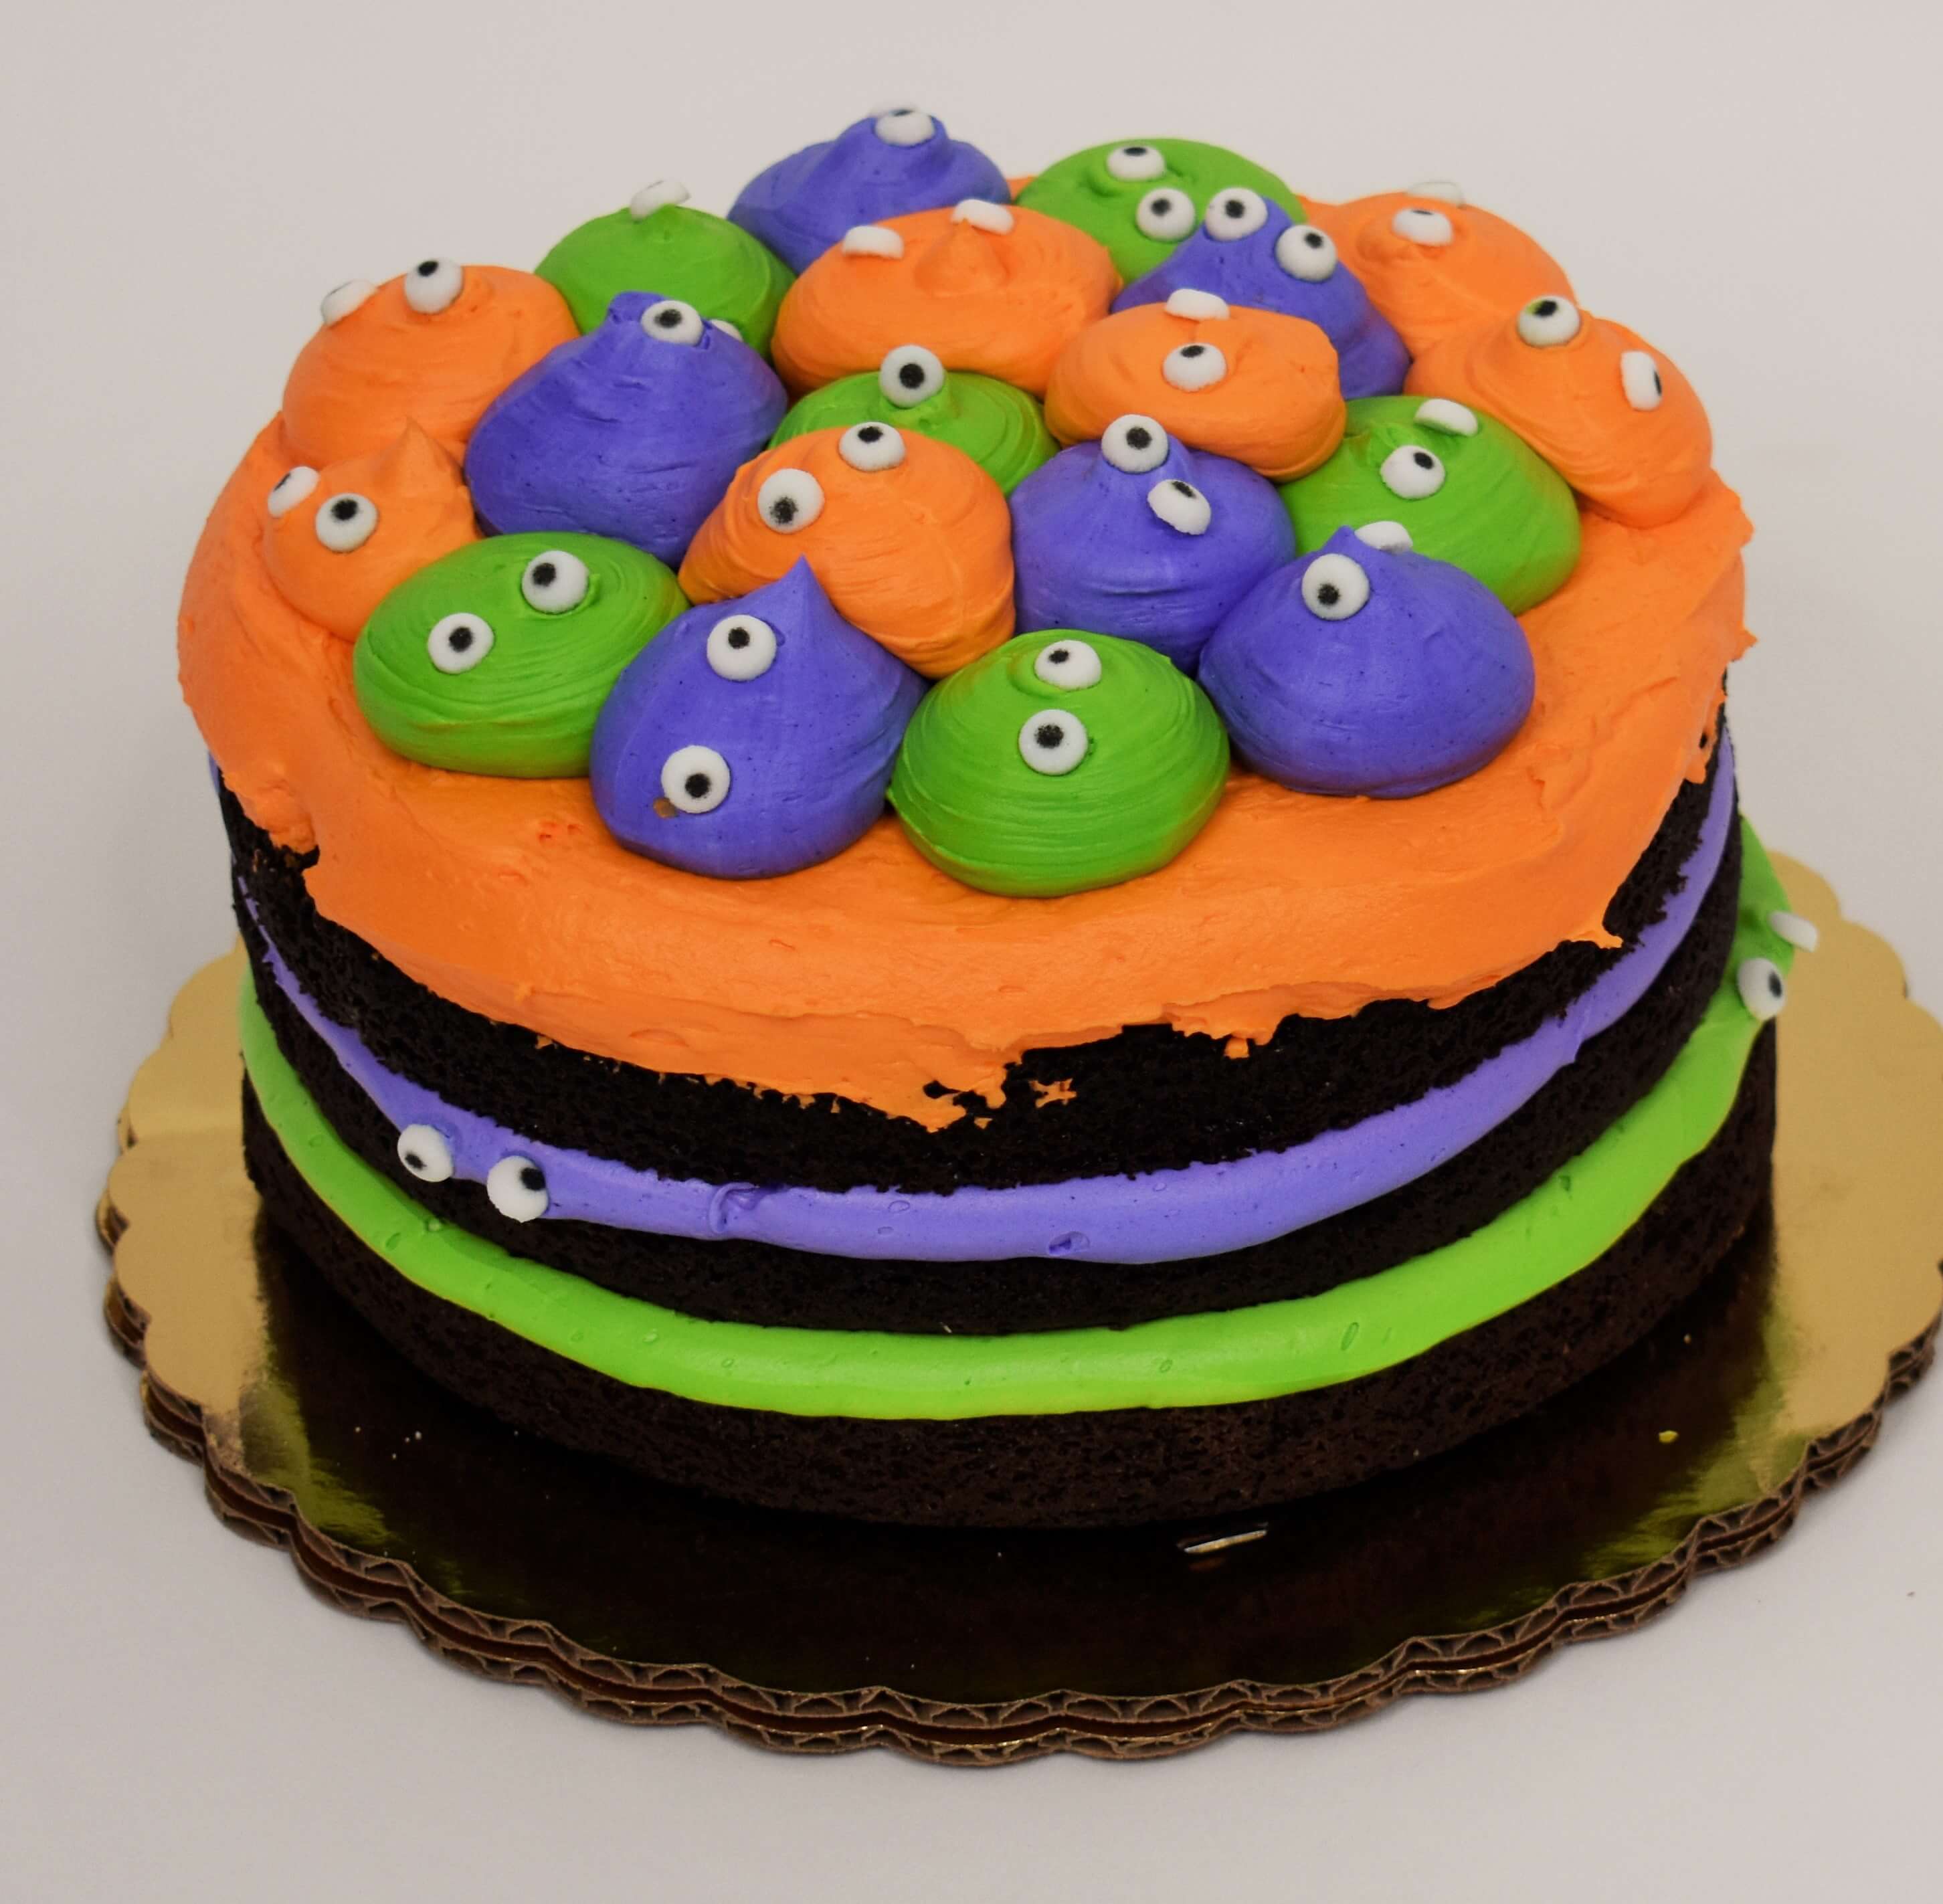 MaArthur's Bakery Custom Cake with Orange, Purple, and Green Heads with Eyes.